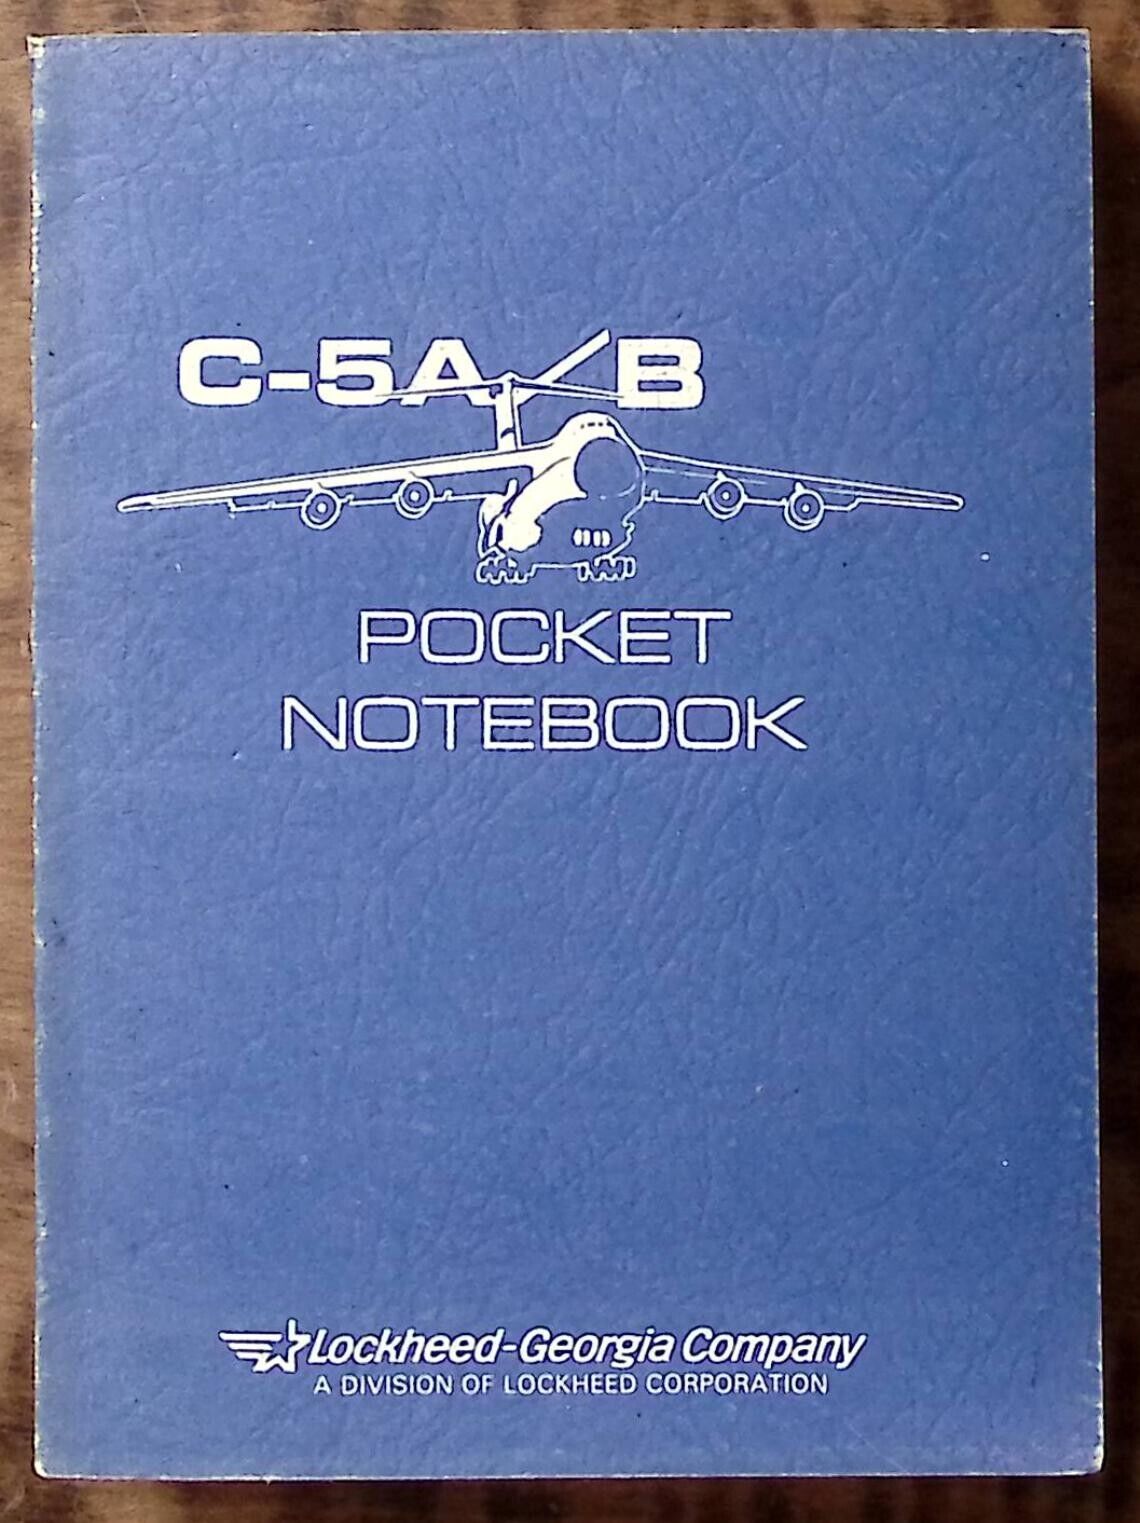 1985 LOCKHEED-GEORGIA CO C-5A/B POCKET NOTEBOOK 518 PAGES EXC B347